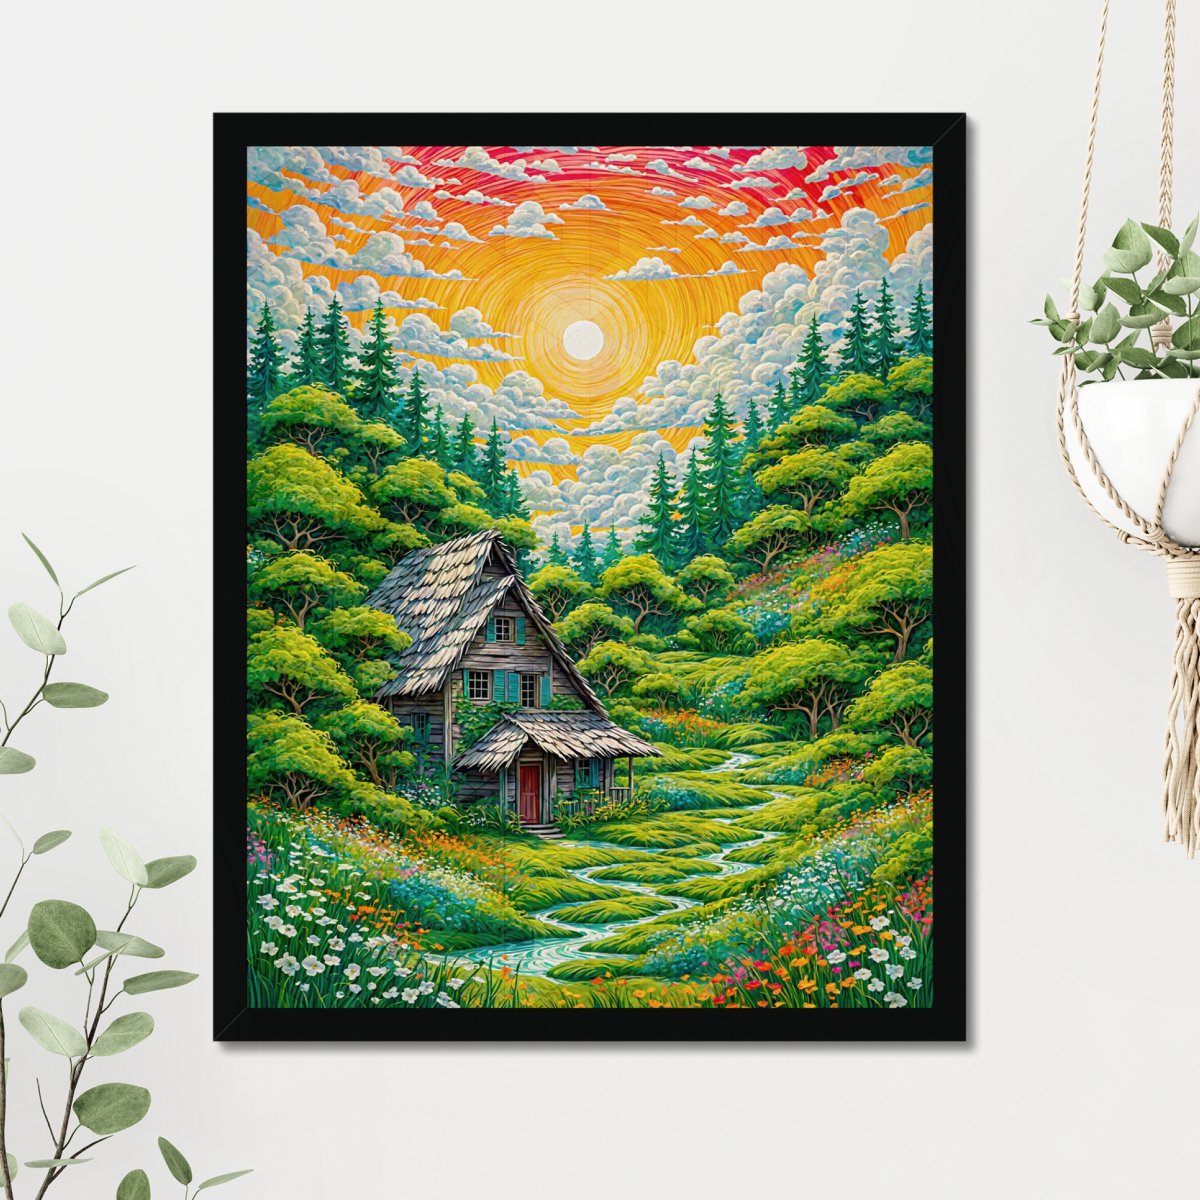 Rural village joy - Art print - Poster - Ever colorful